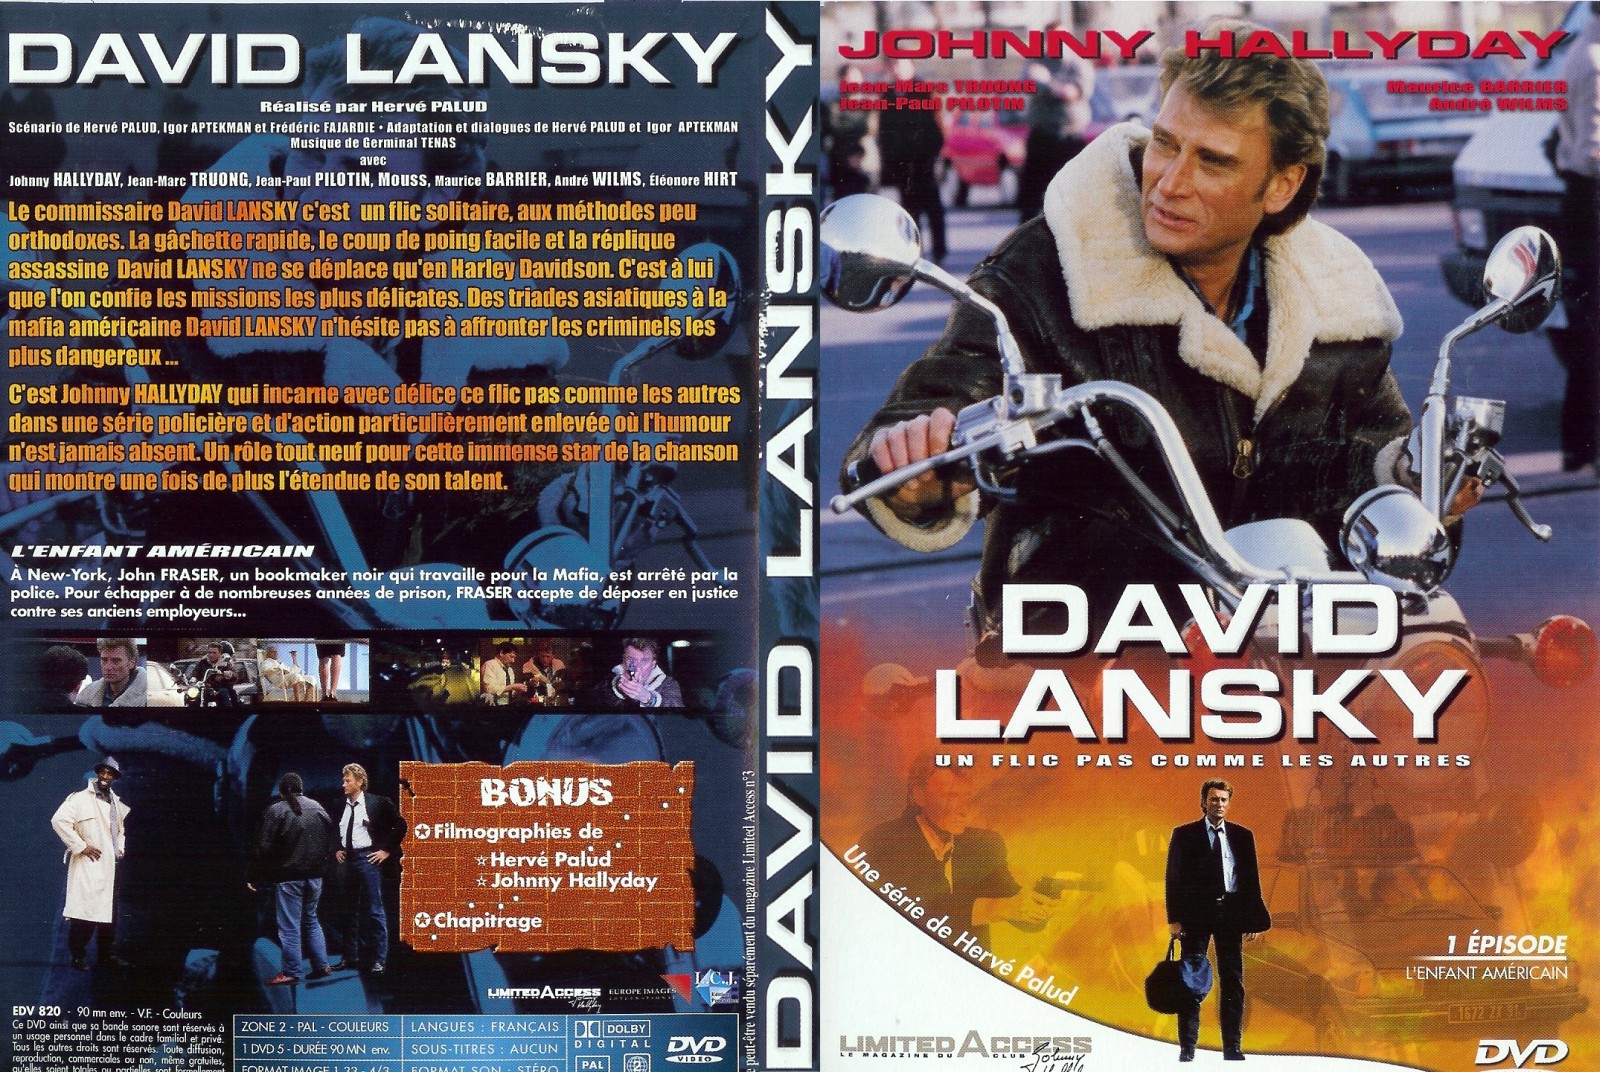 Jaquette DVD David Lansky DVD 2